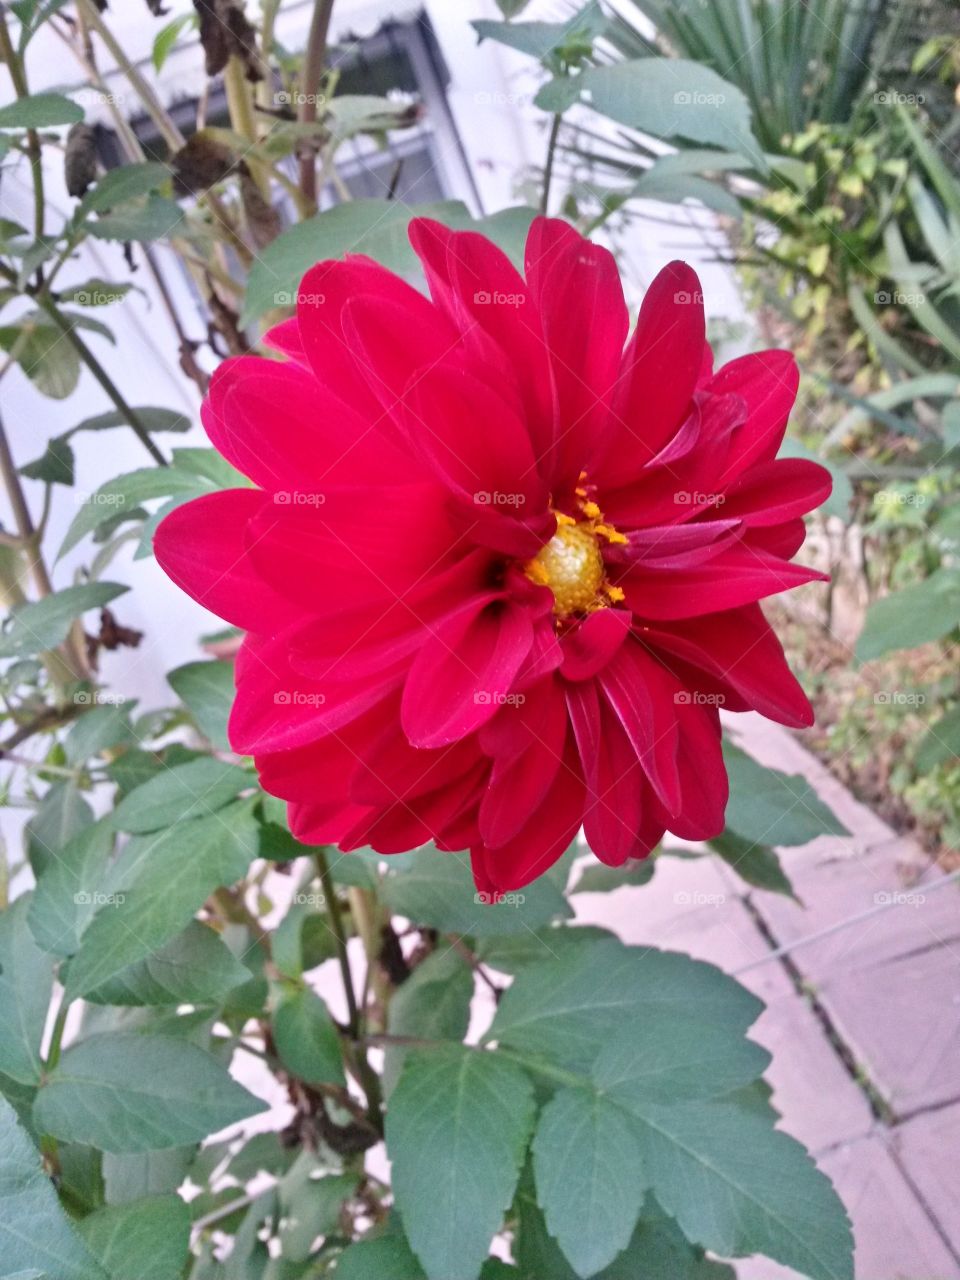 Nice red flower